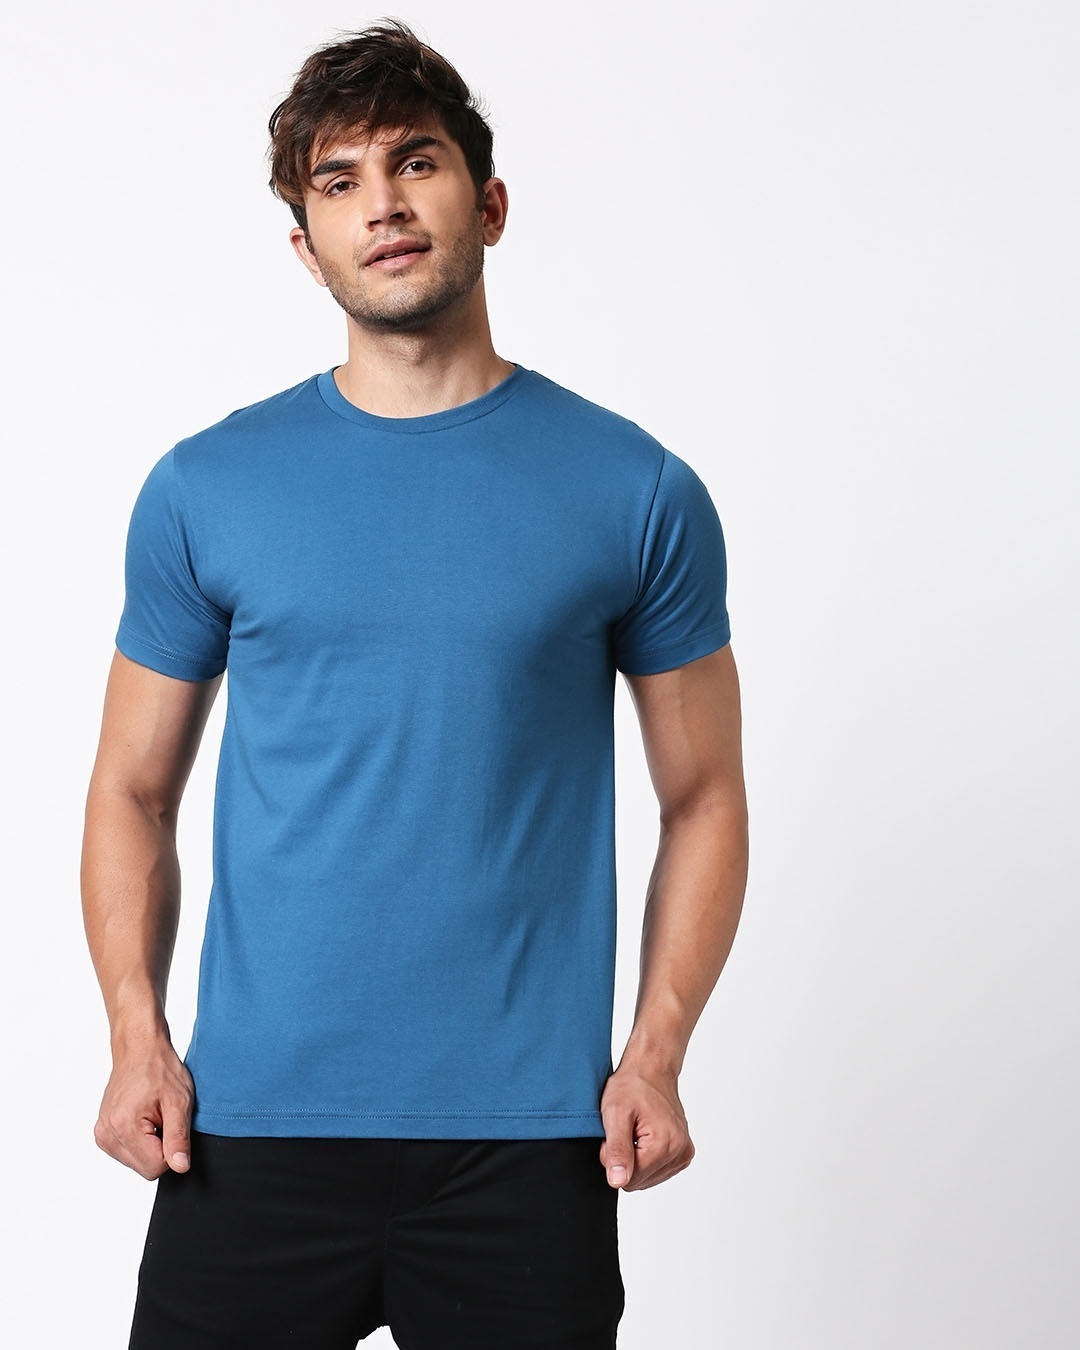 Shop Digi Teal Half Sleeve T-Shirt-Design